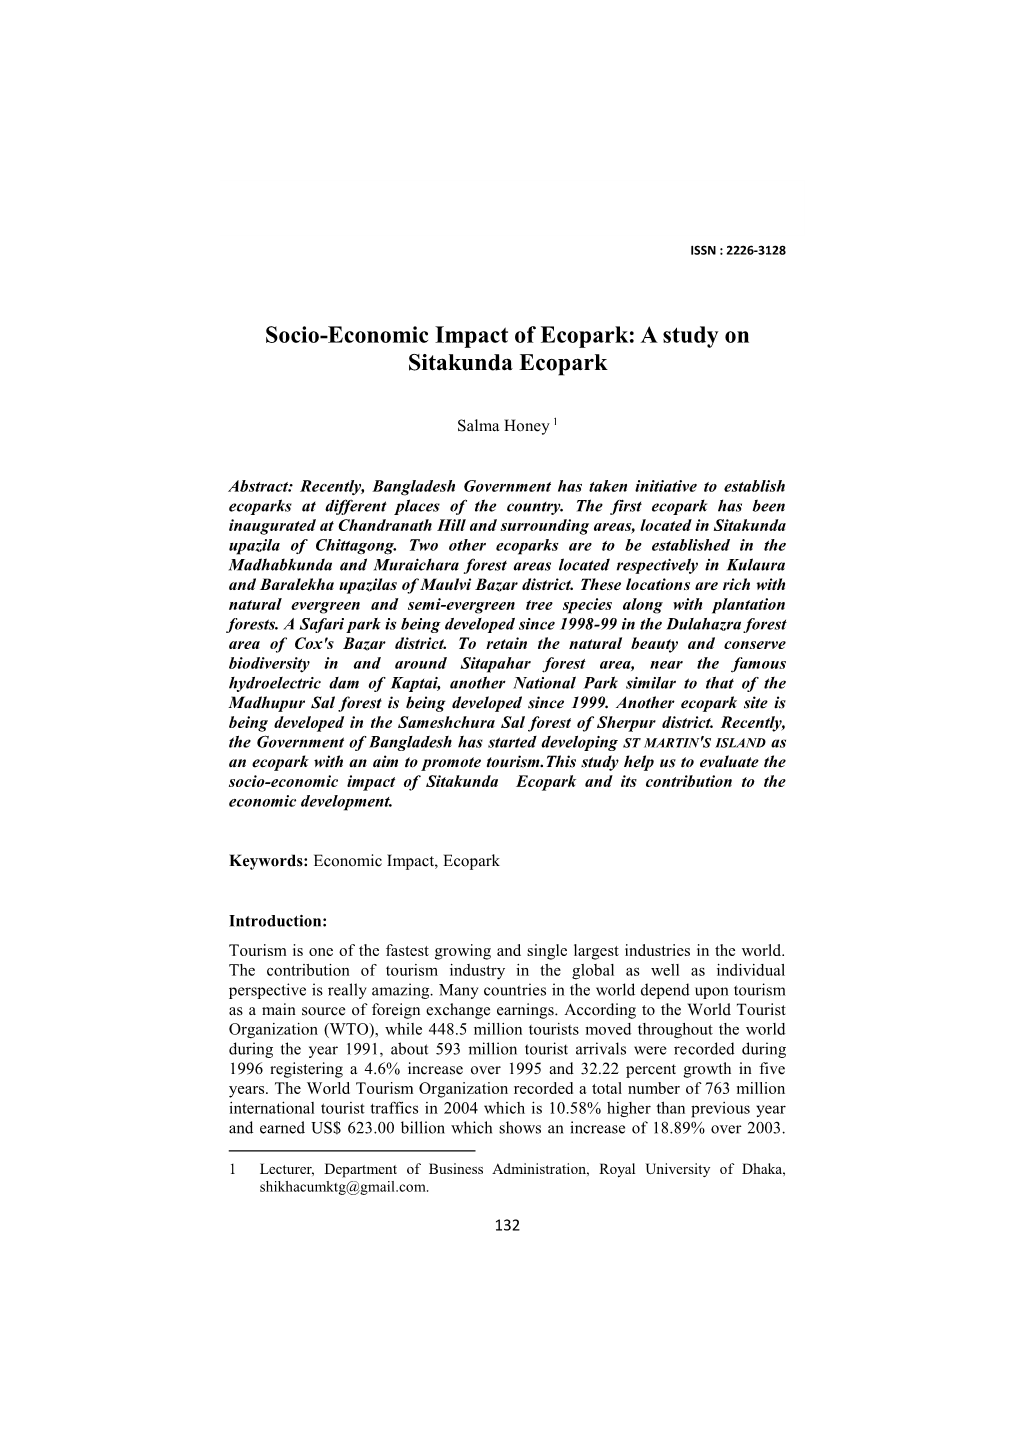 Socio-Economic Impact of Ecopark: a Study on Sitakunda Ecopark ISSN : 2226-3128